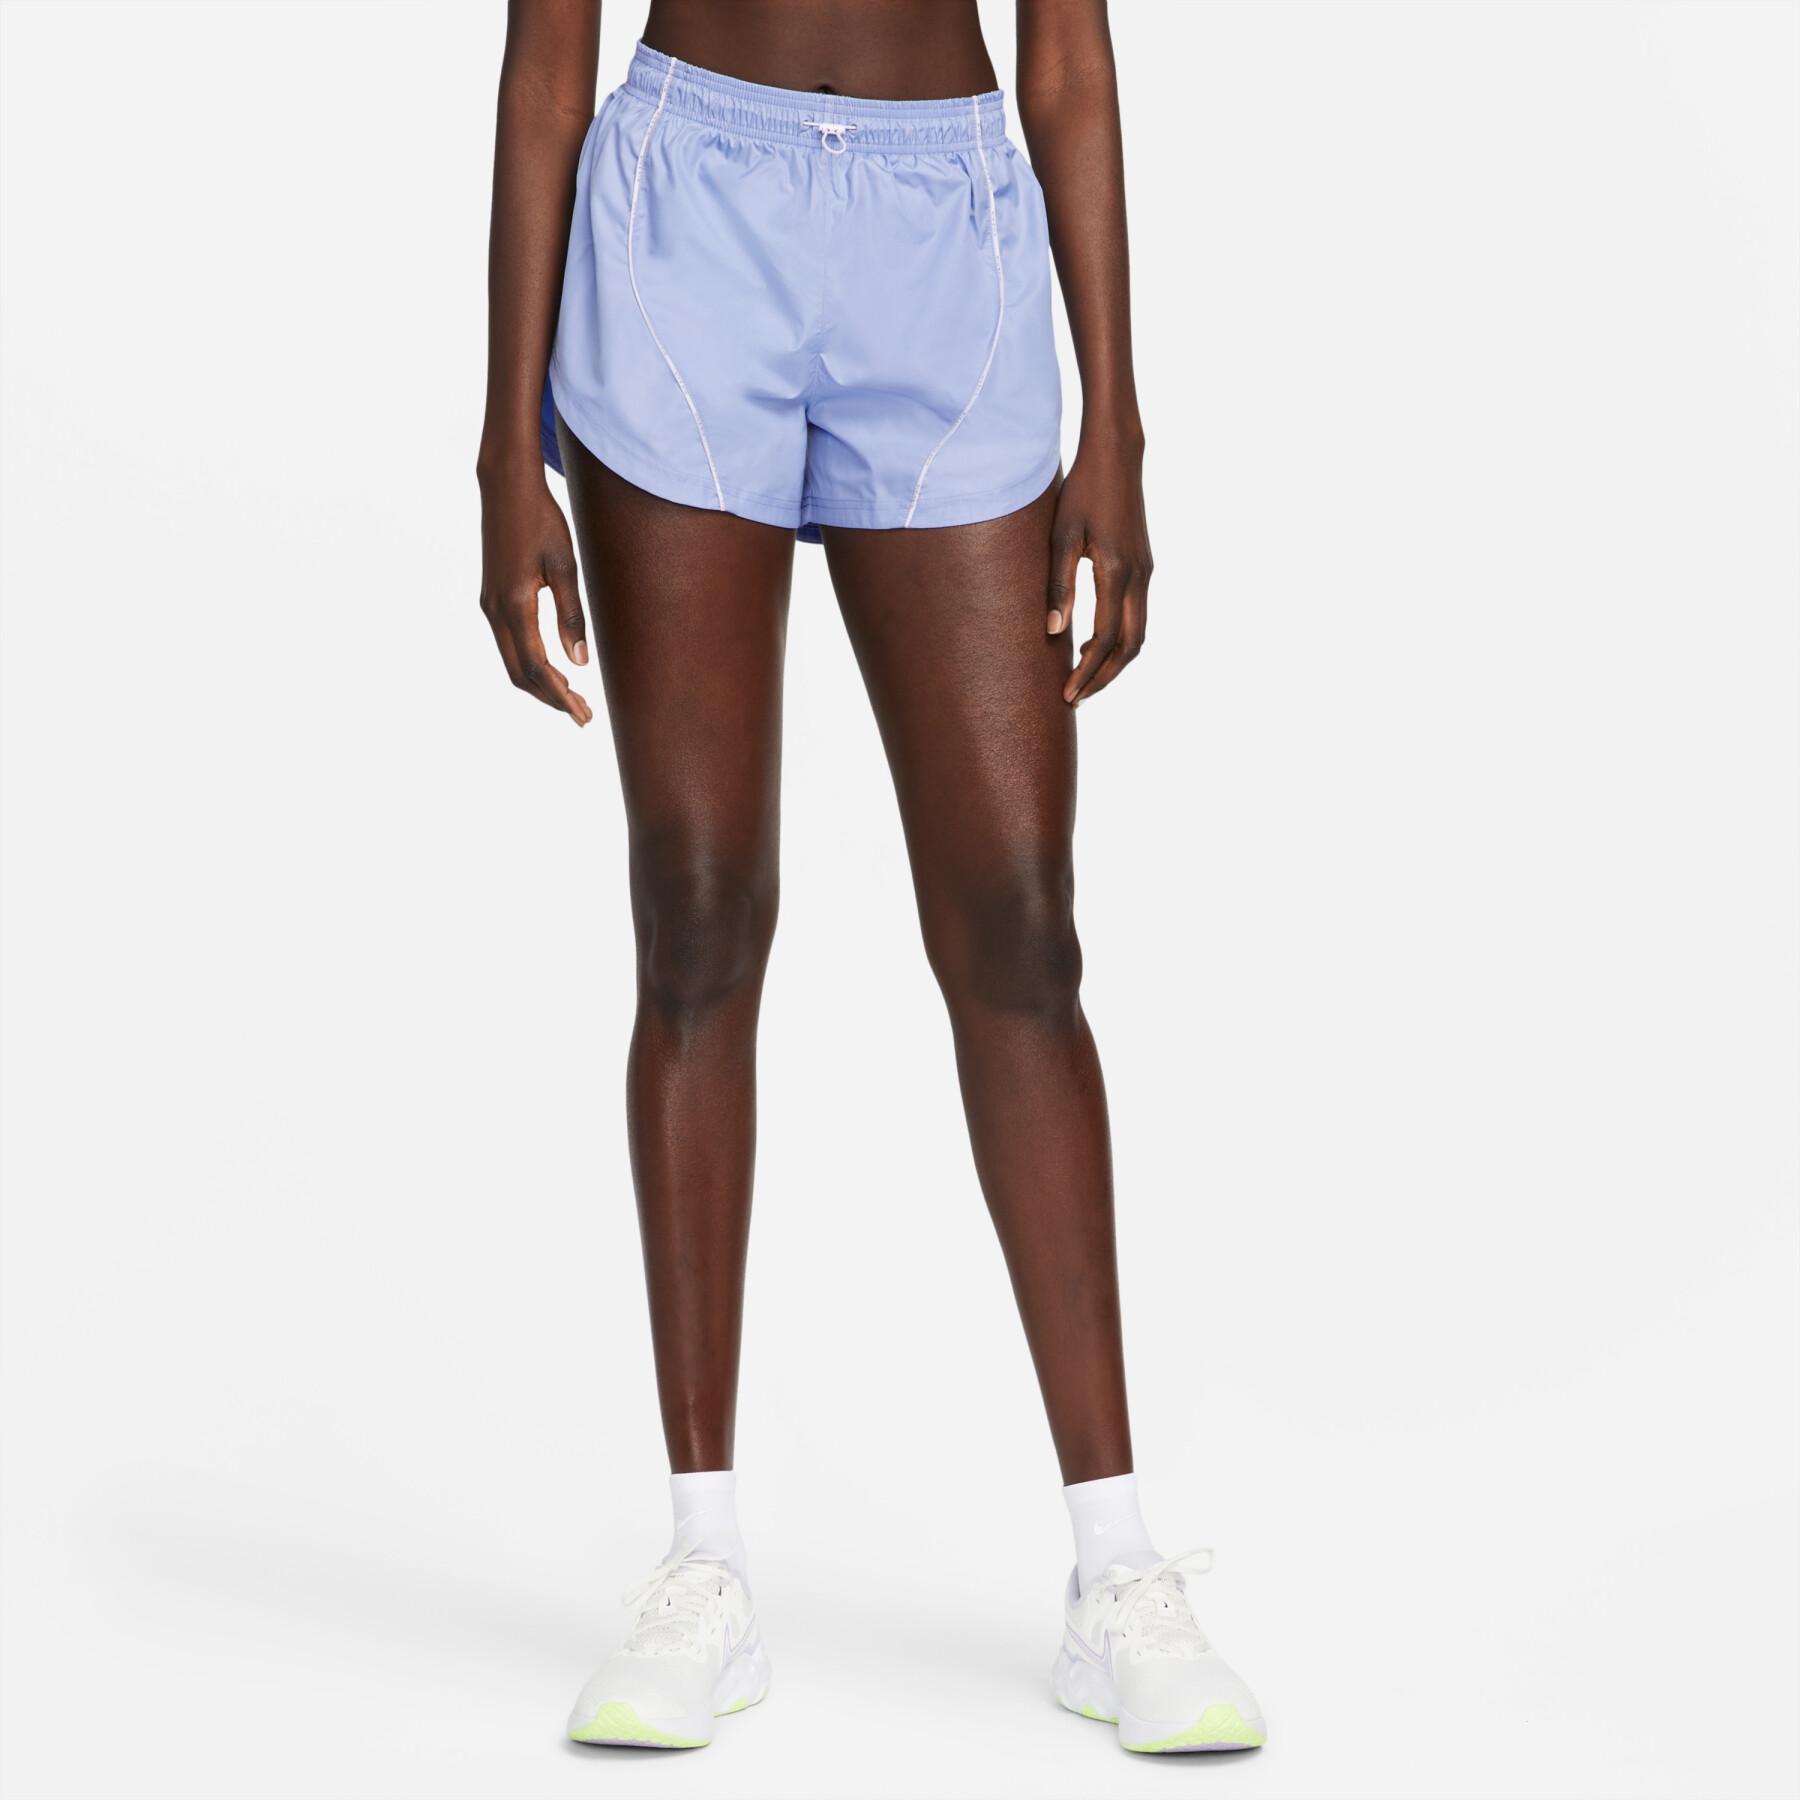 Women's shorts Nike Air